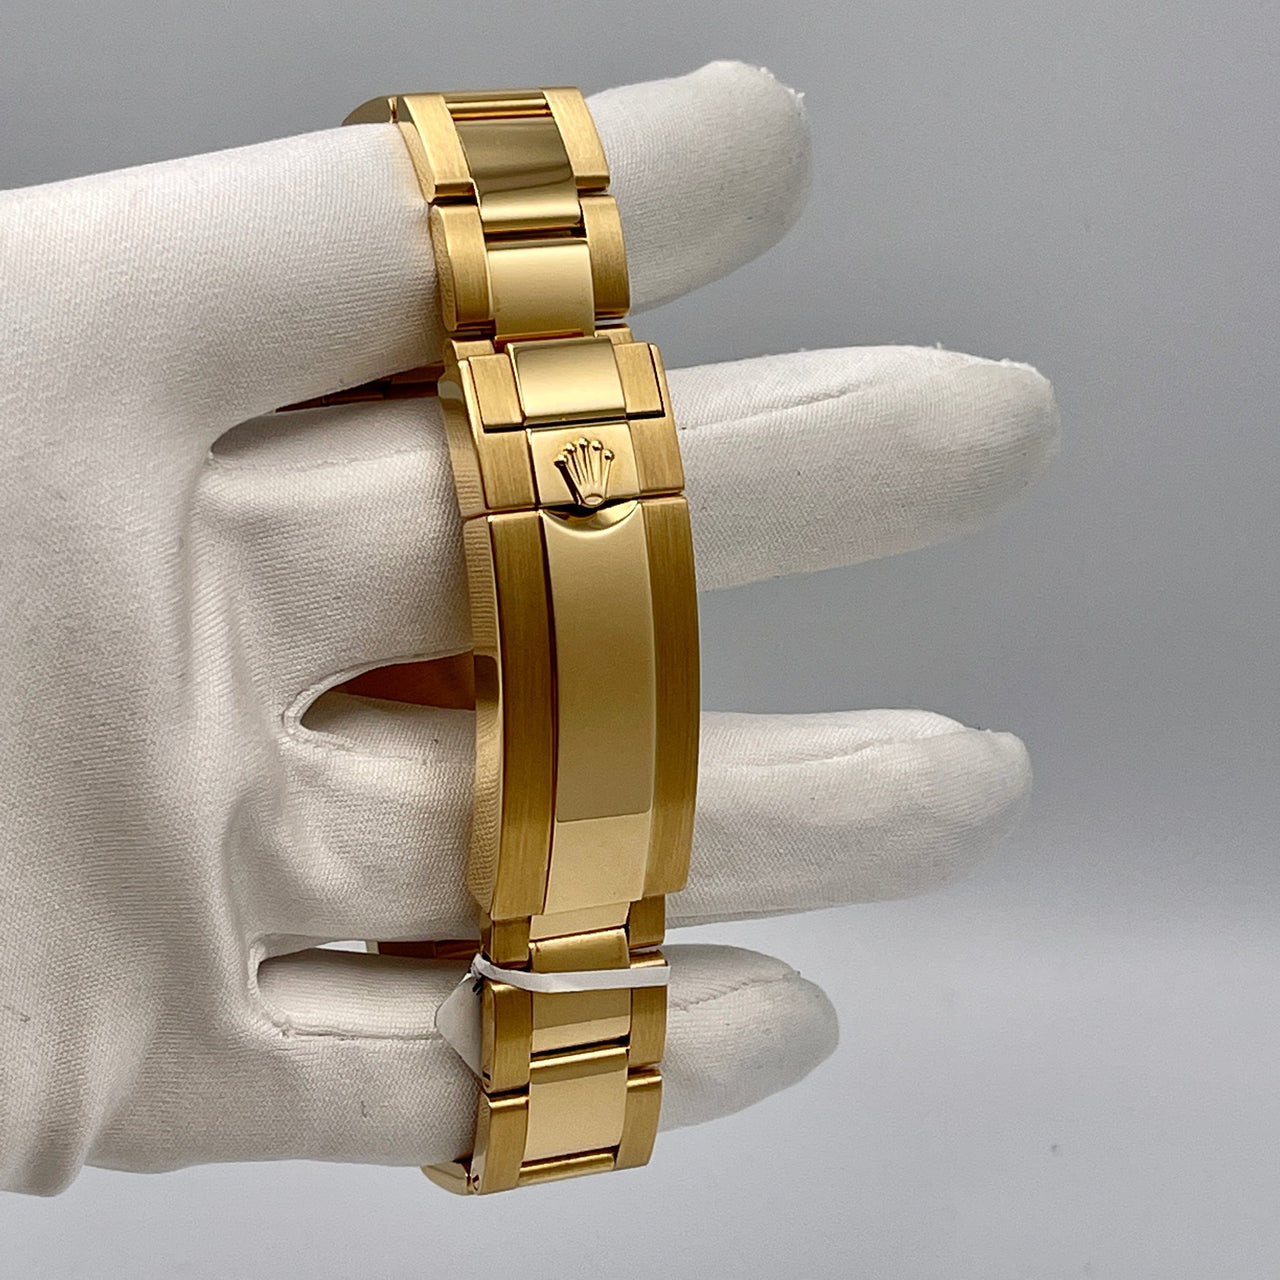 Rolex Submariner Date 40 Yellow Gold Black Dial 116618LN wrist aficionado